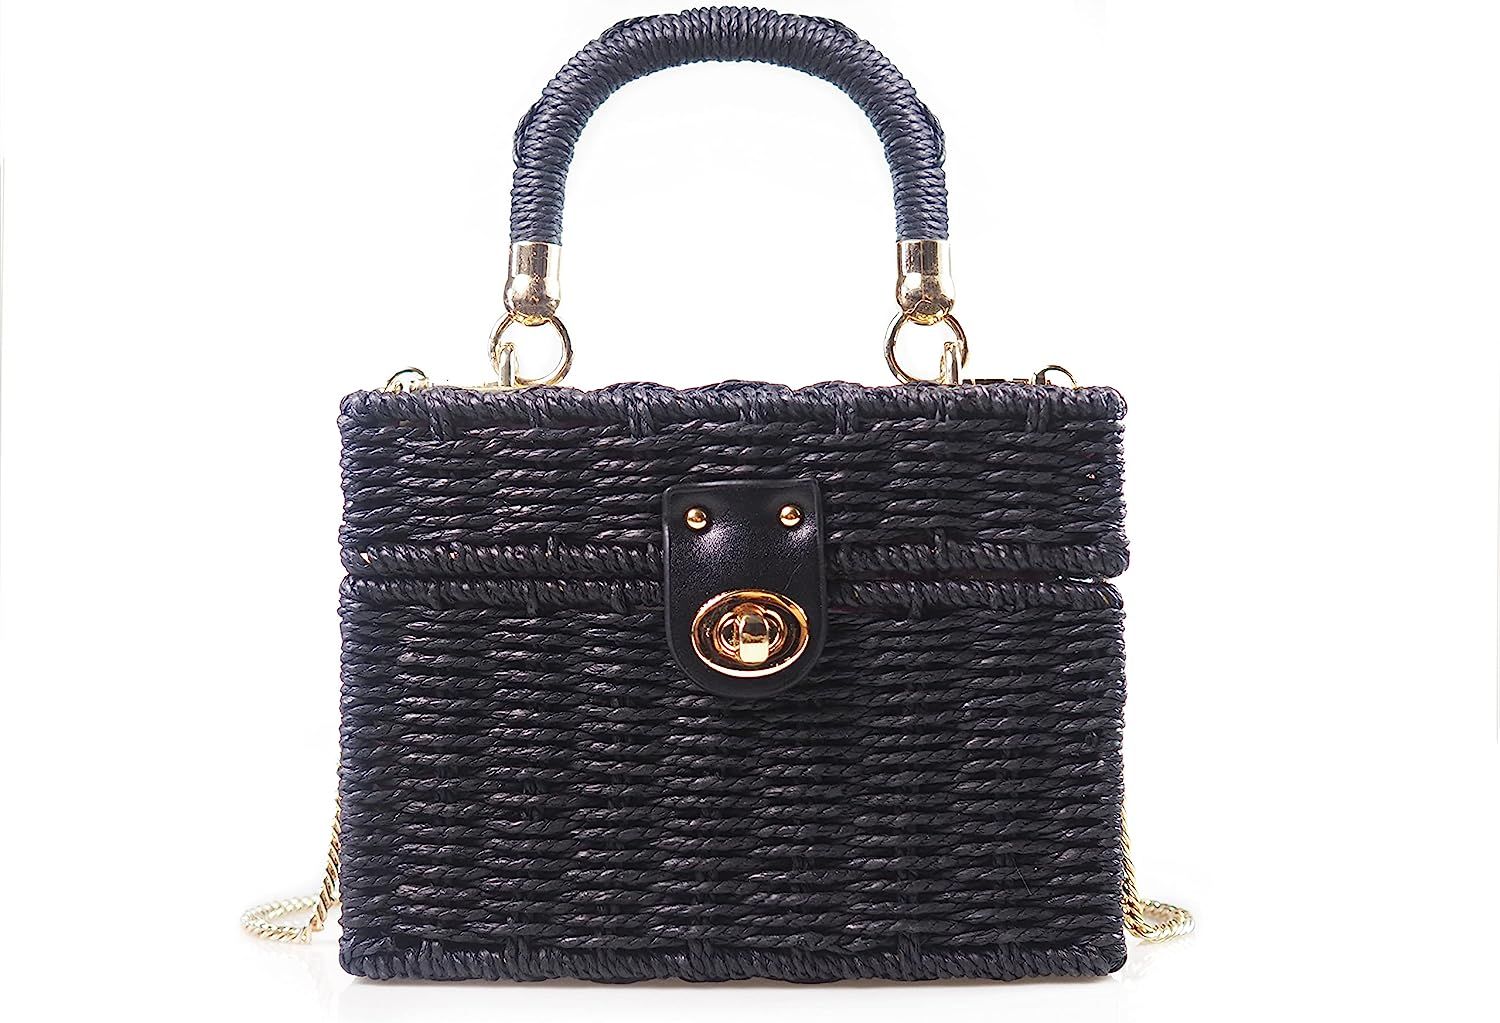 JIYALI Handwoven Rattan vintage purse Bag Natural Chic Casual Handbag Beach Sea tote Basket Straw... | Amazon (US)